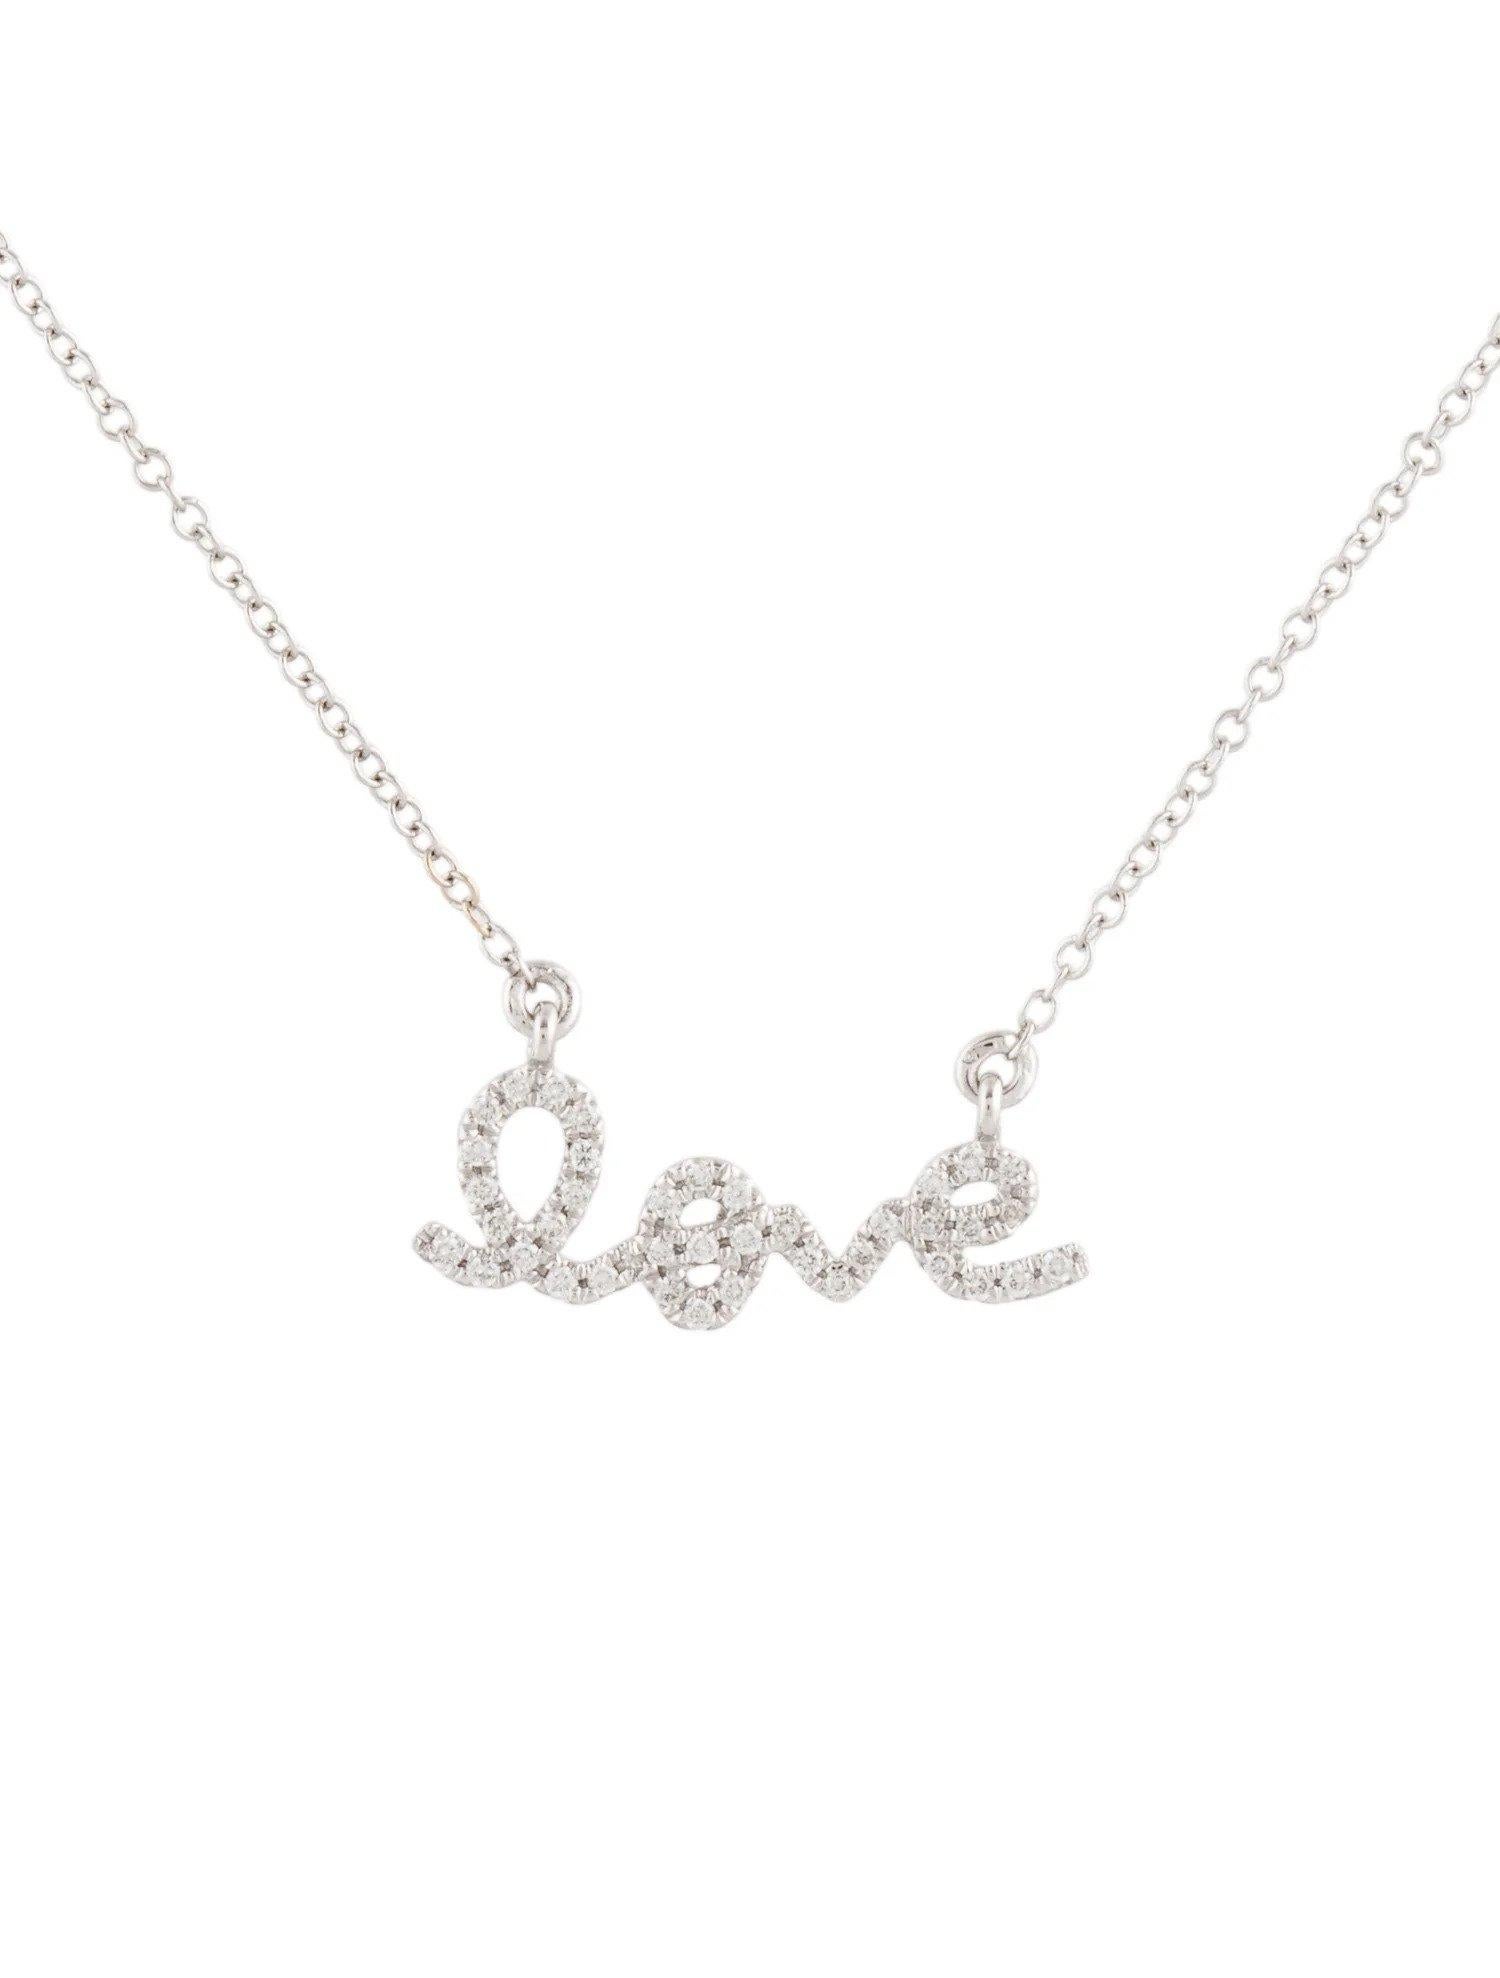 Round Cut 0.13 Carat Diamond Love White Gold Pendant Necklace For Sale